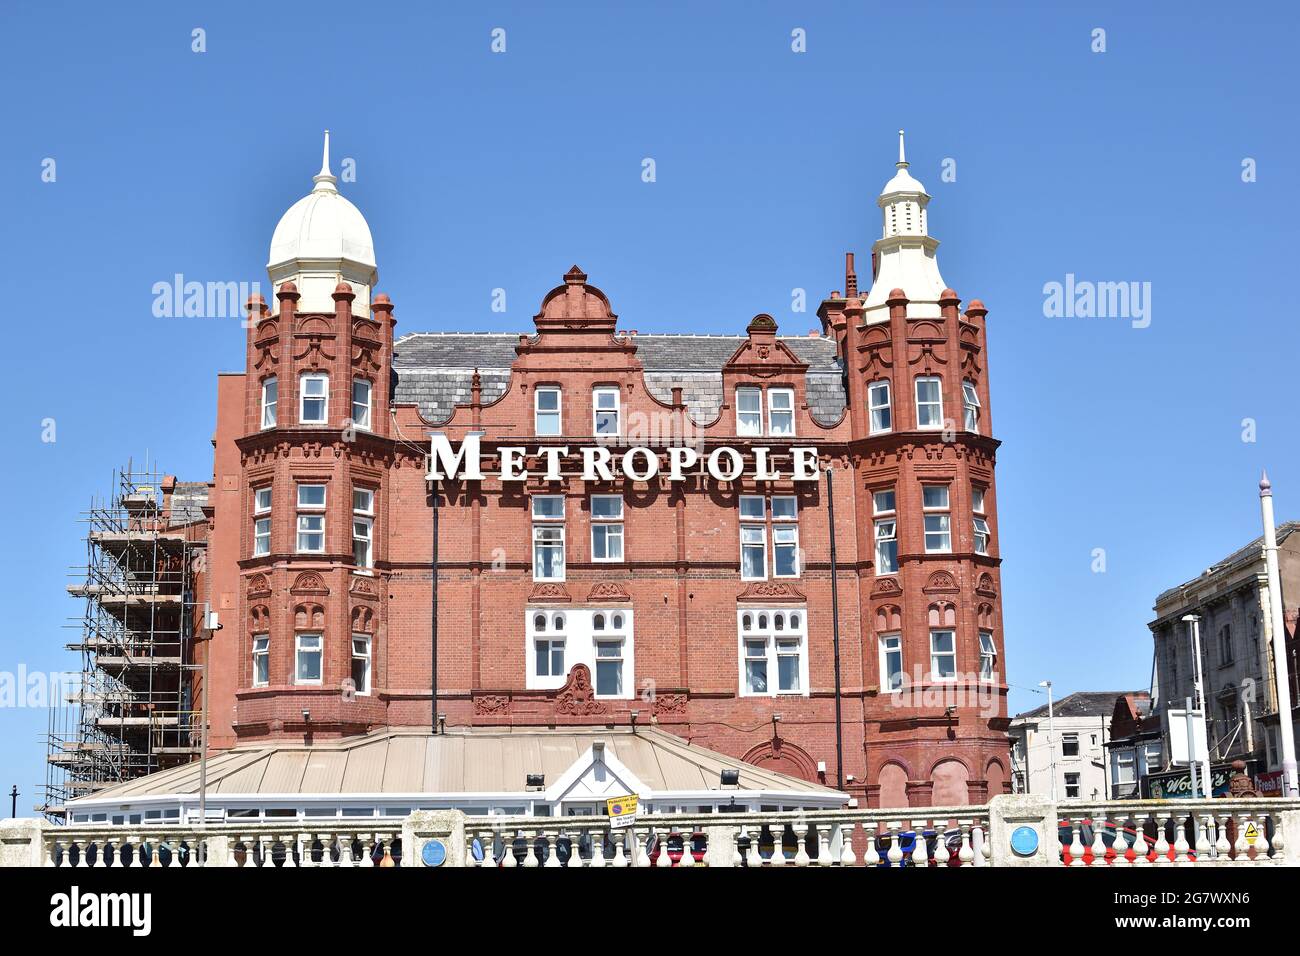 Metropole hotel, Blackpool Stock Photo